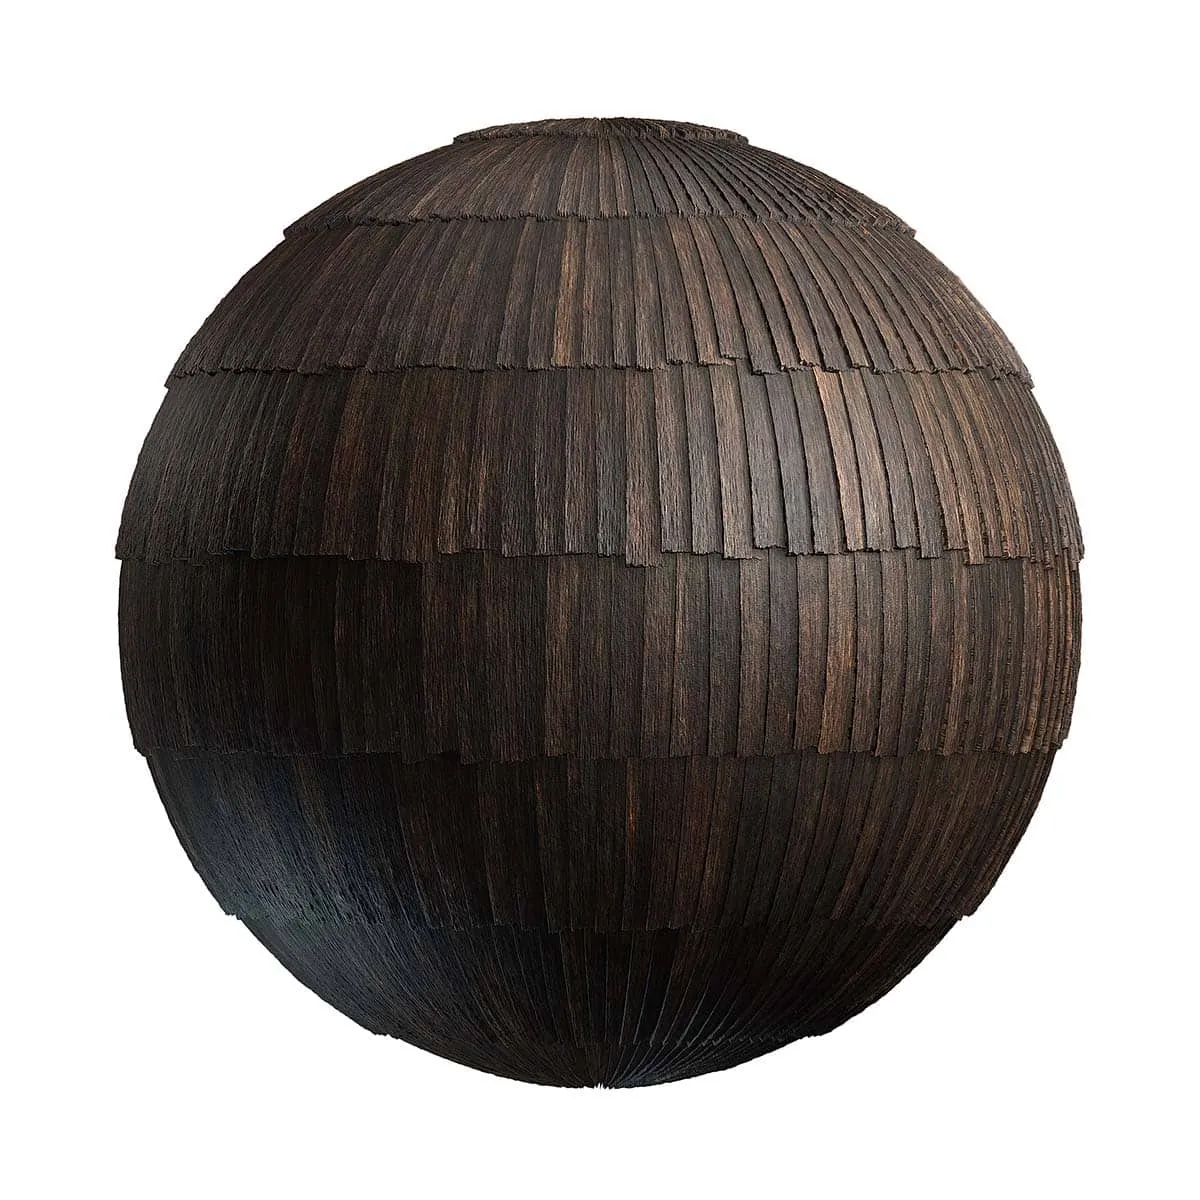 PBR Textures Volume 22 – Roofs – 4K – 8K – brown_wooden_roof_22_26